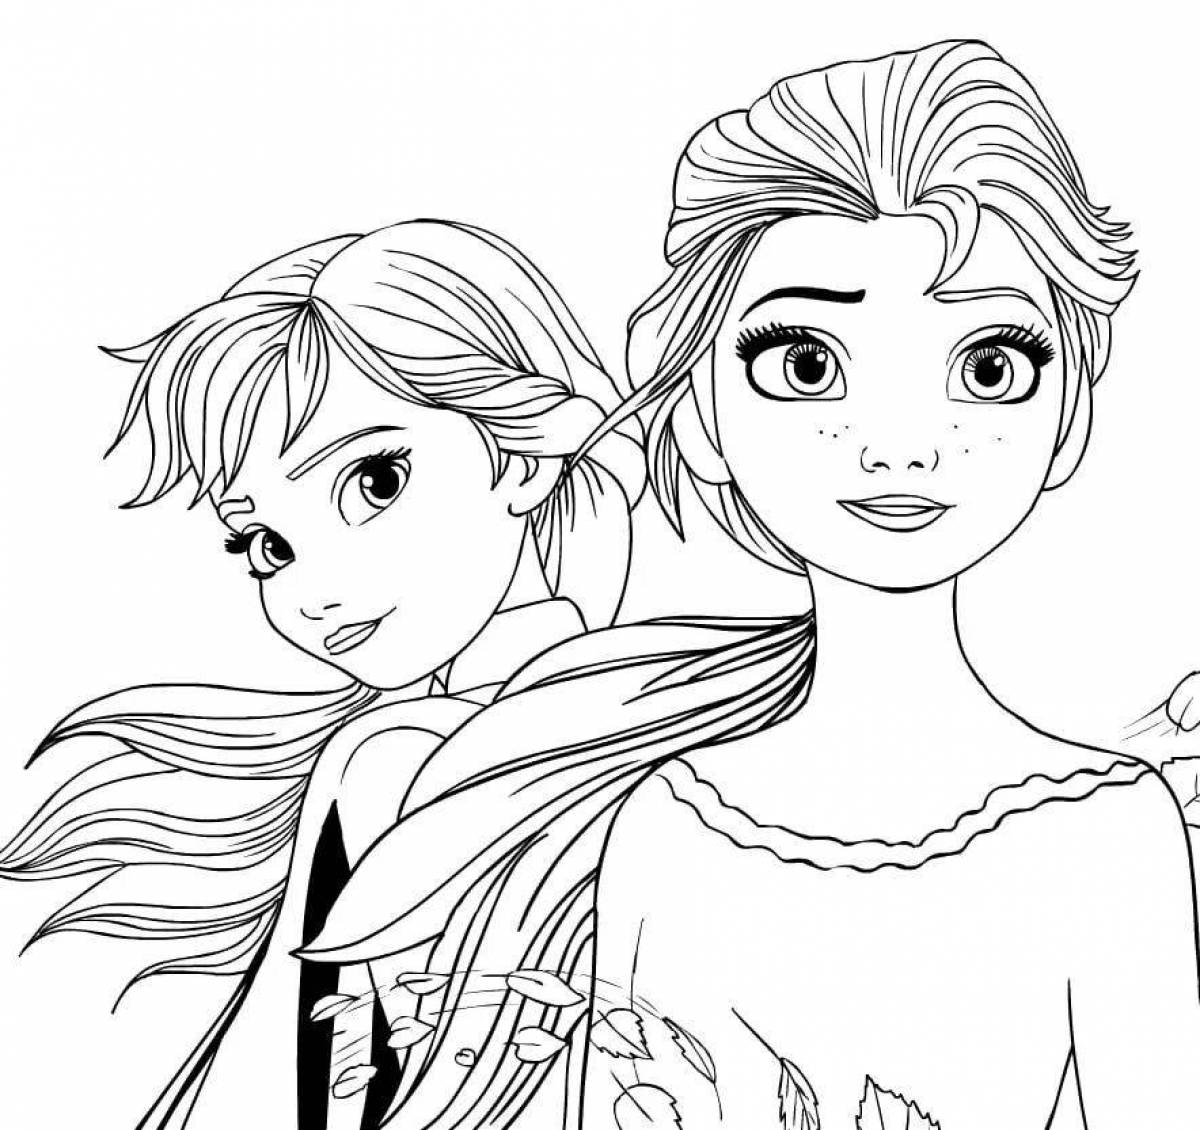 Elsa and anna fun coloring book